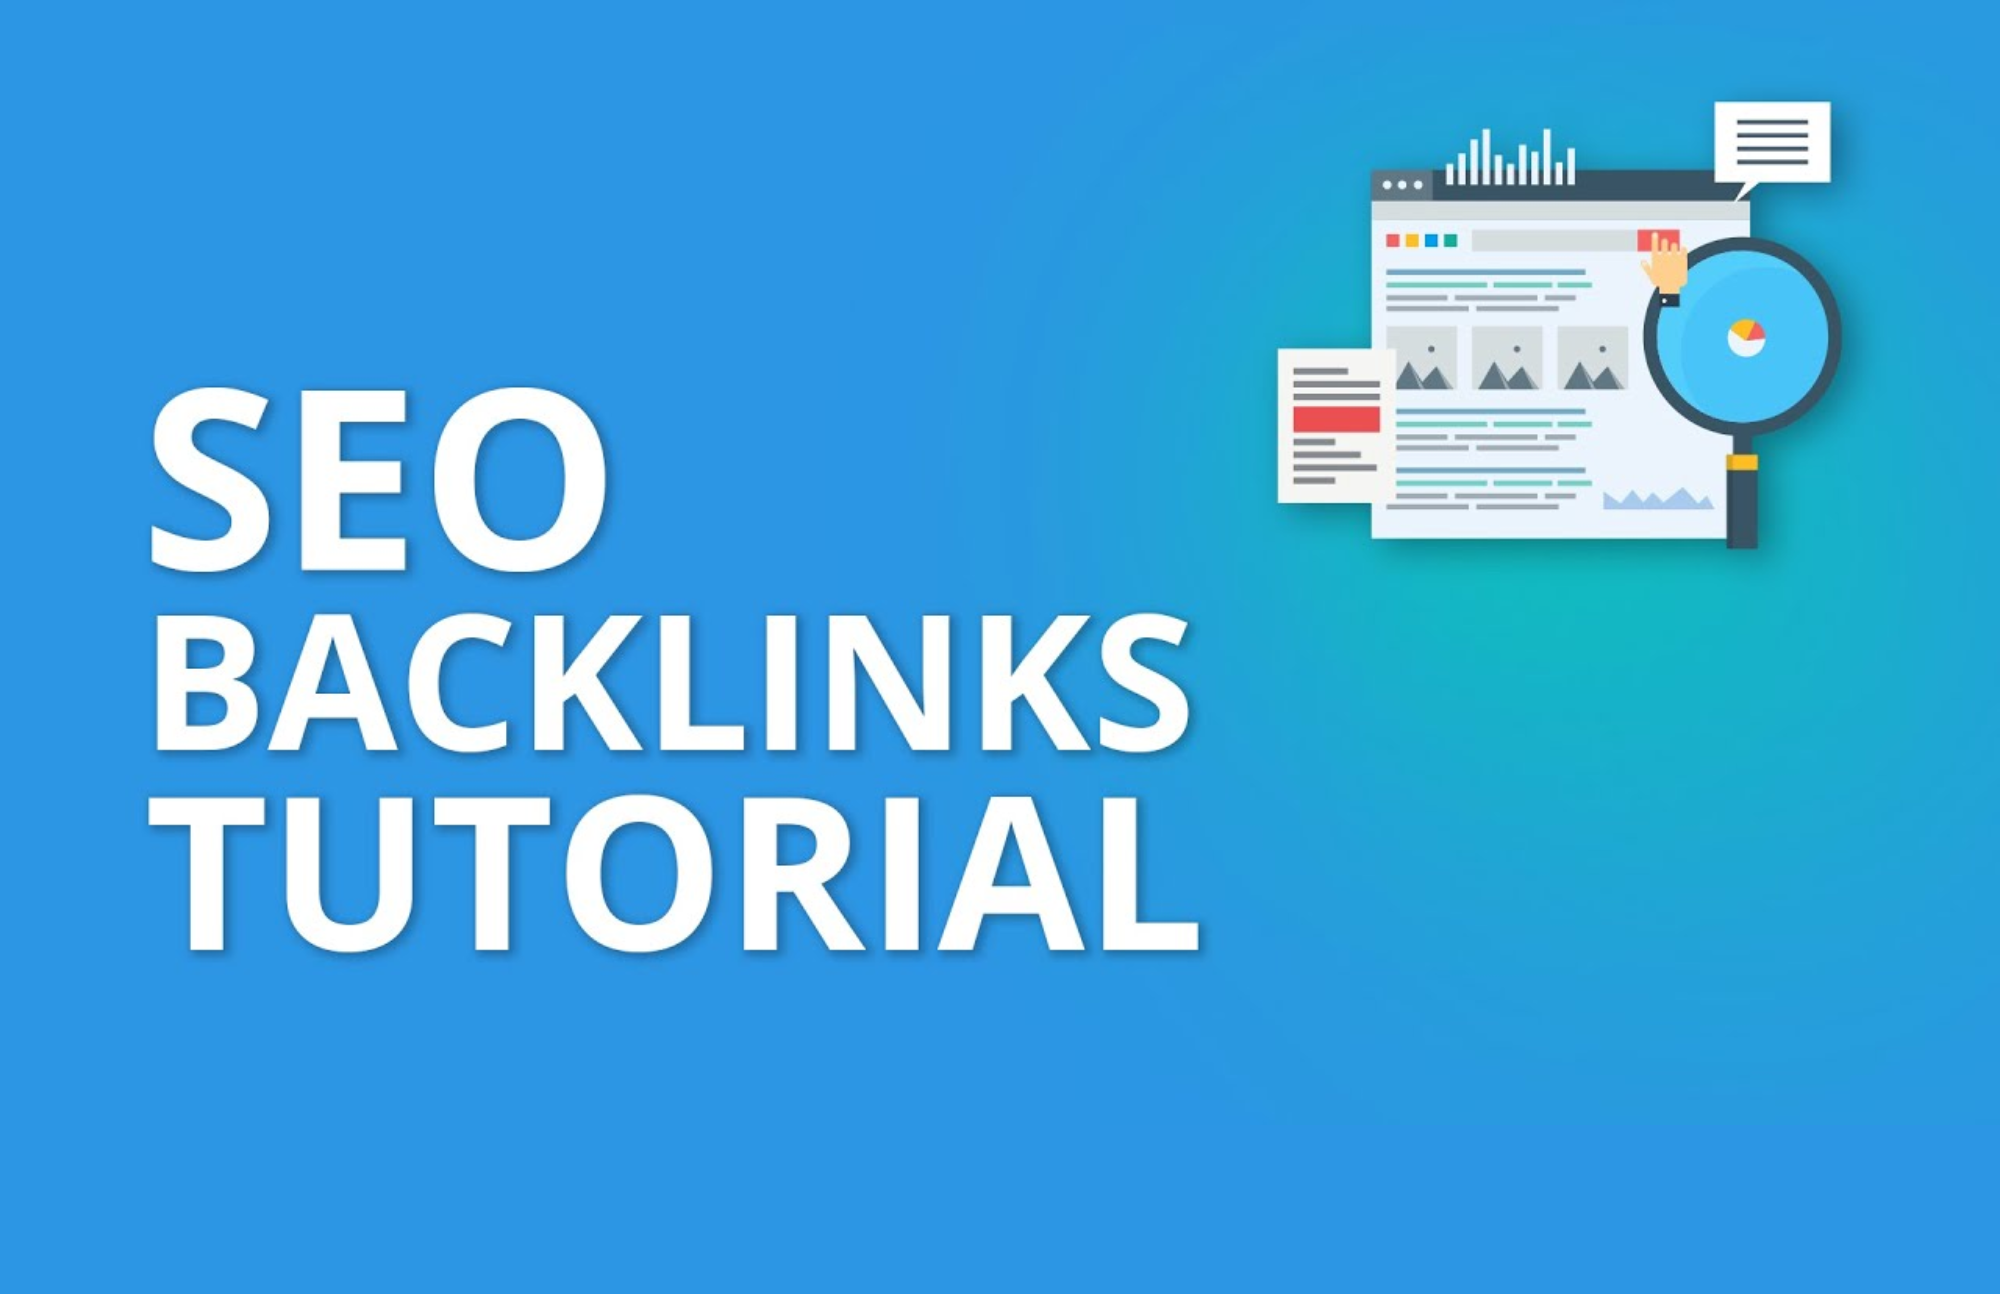 SEO Backlinks tutorial with a website